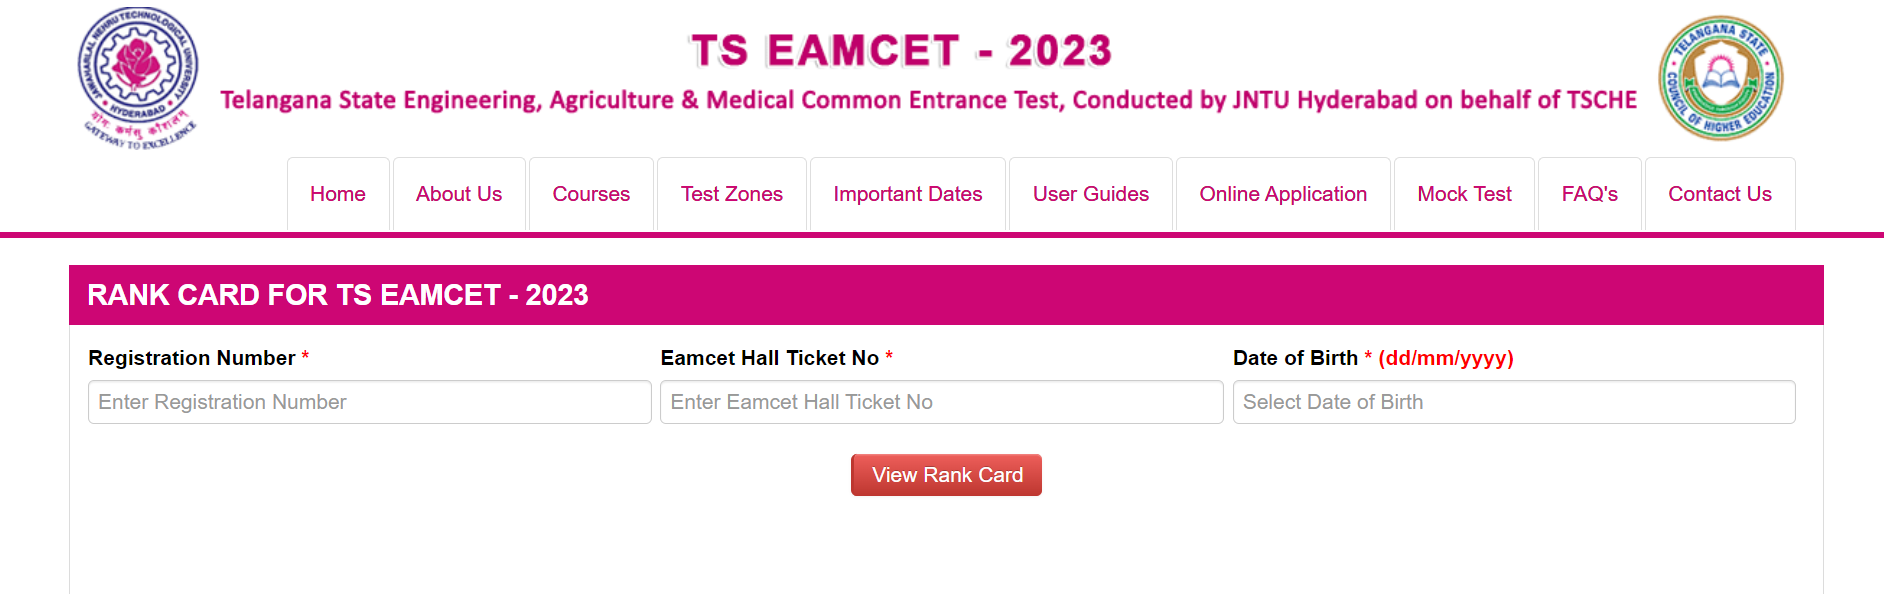 TS EAMCET 2023 Rank Card